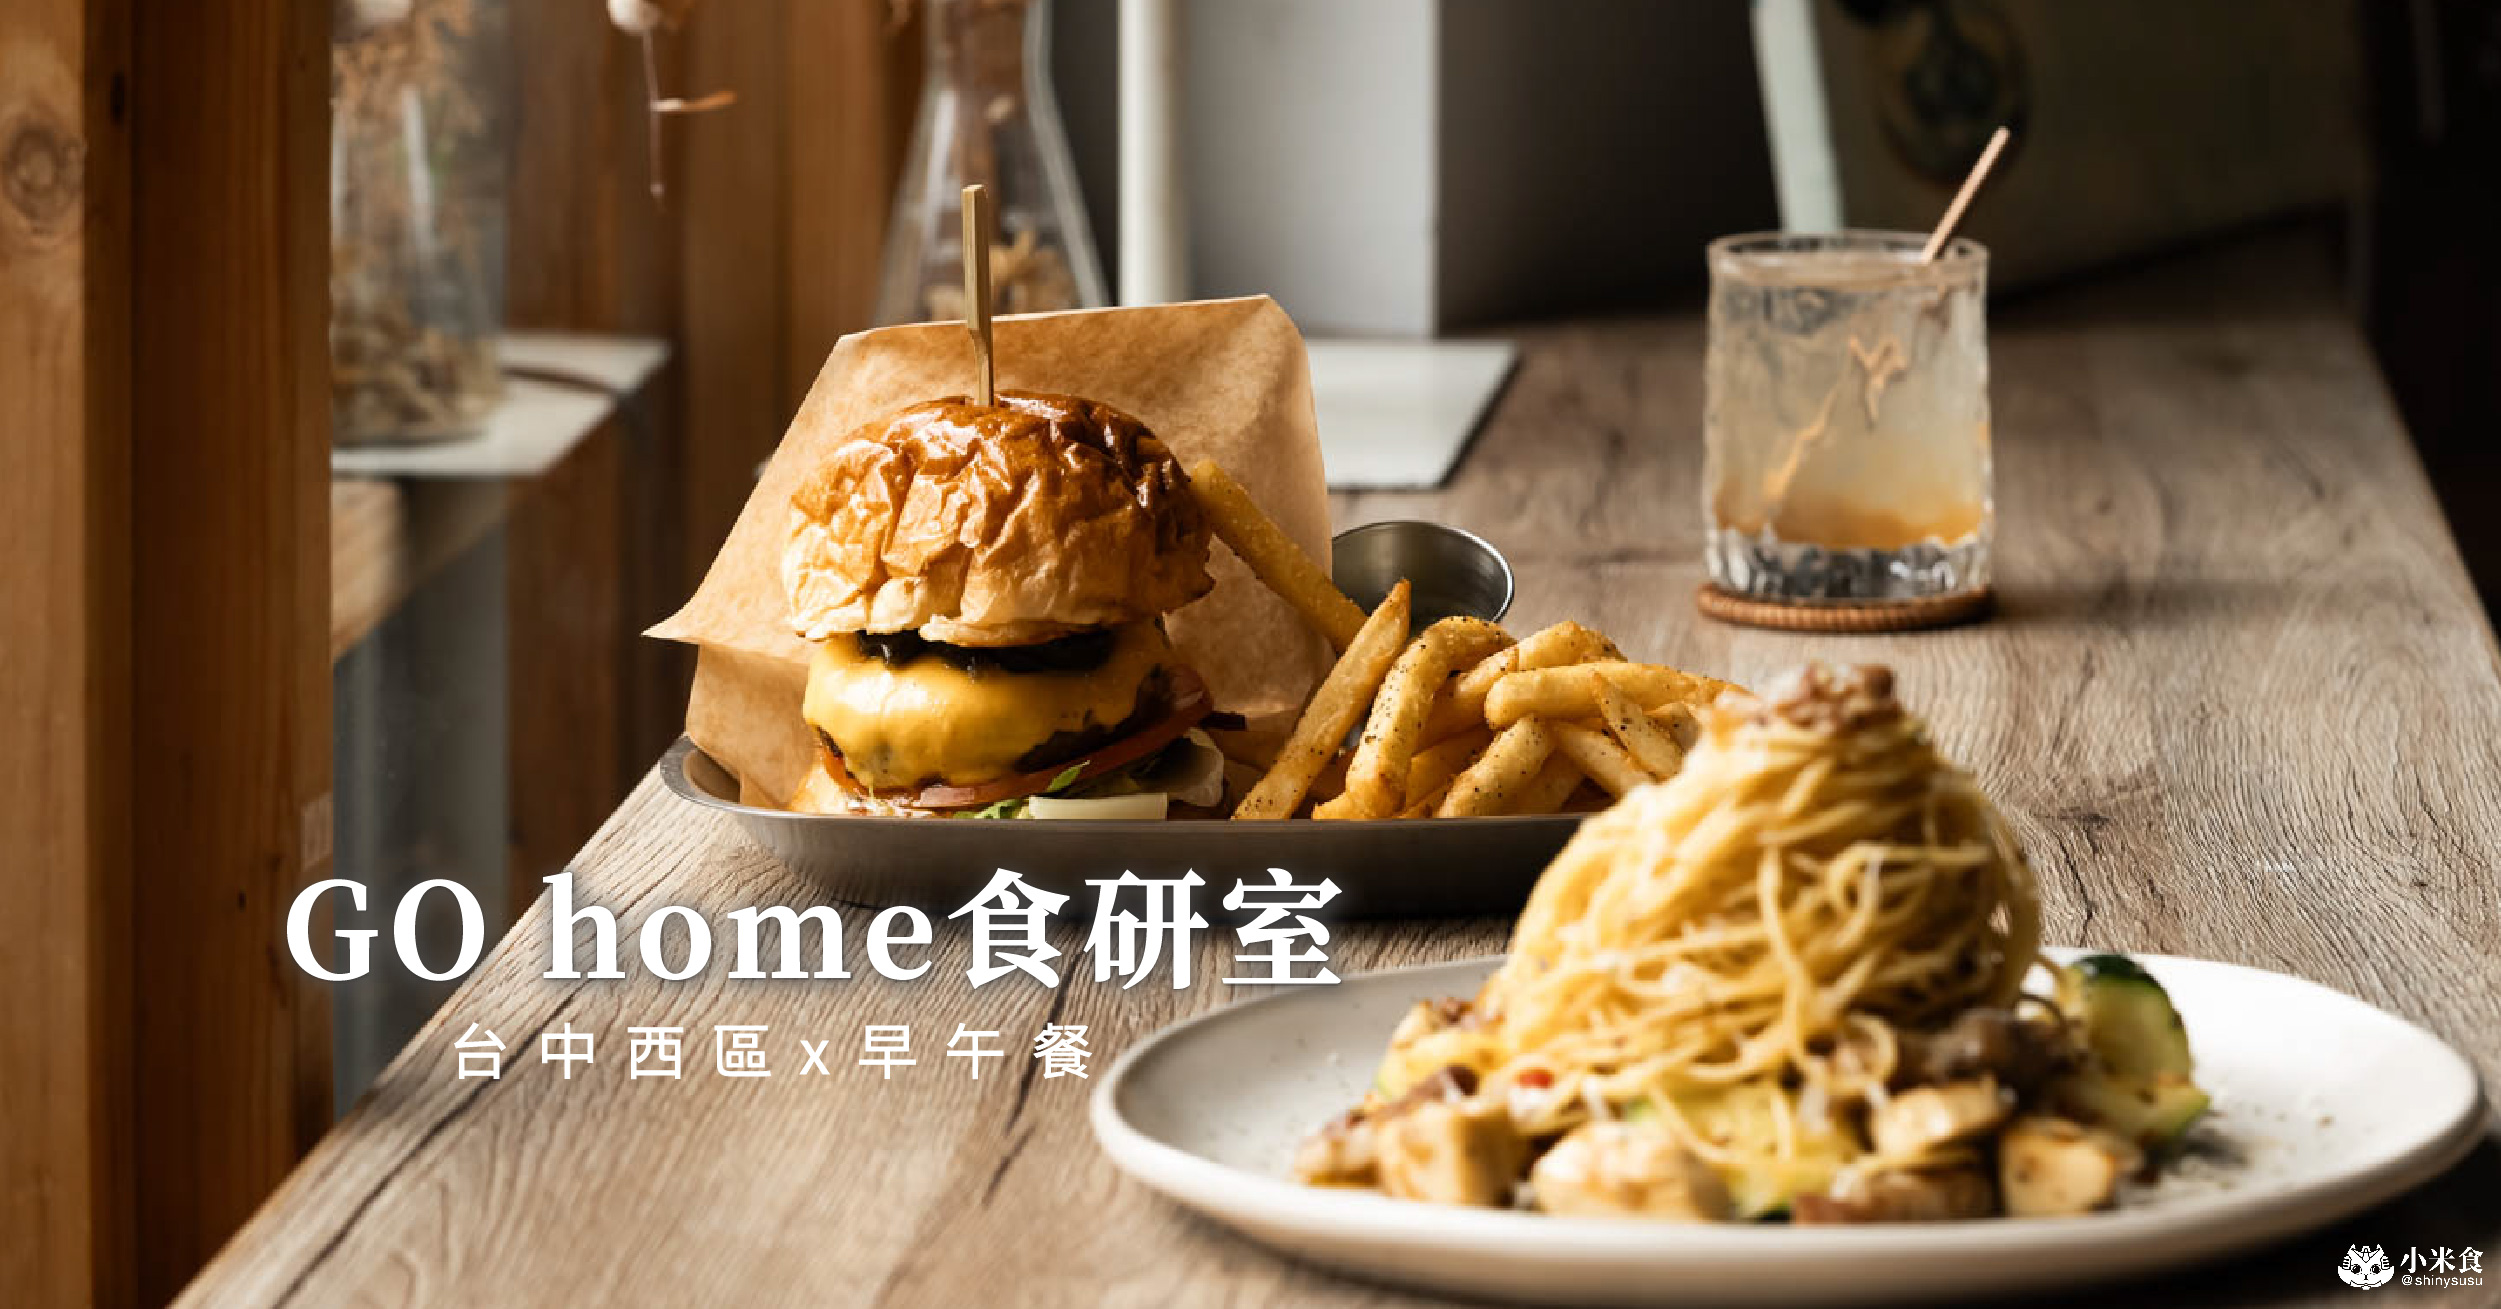 GO home食研室 01